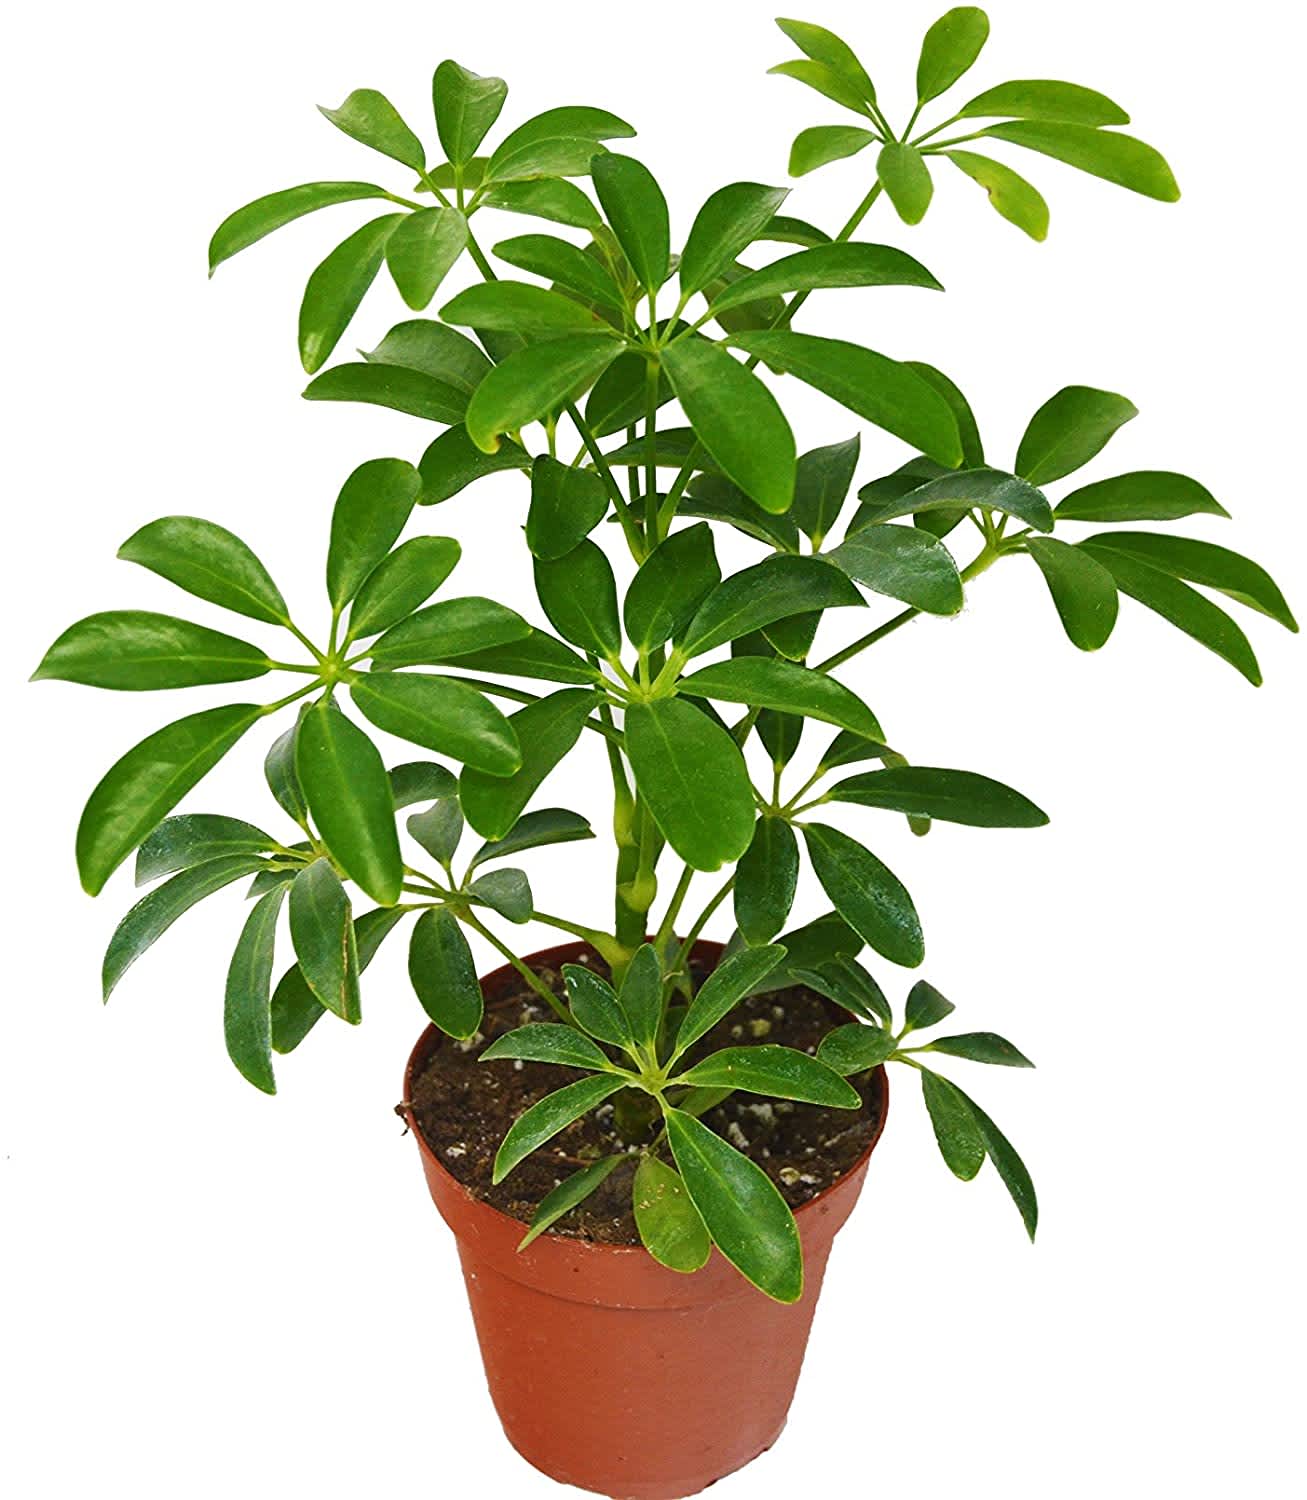 Umbrella Plant Care   How to Grow Umbrella Plants   Apartment Therapy